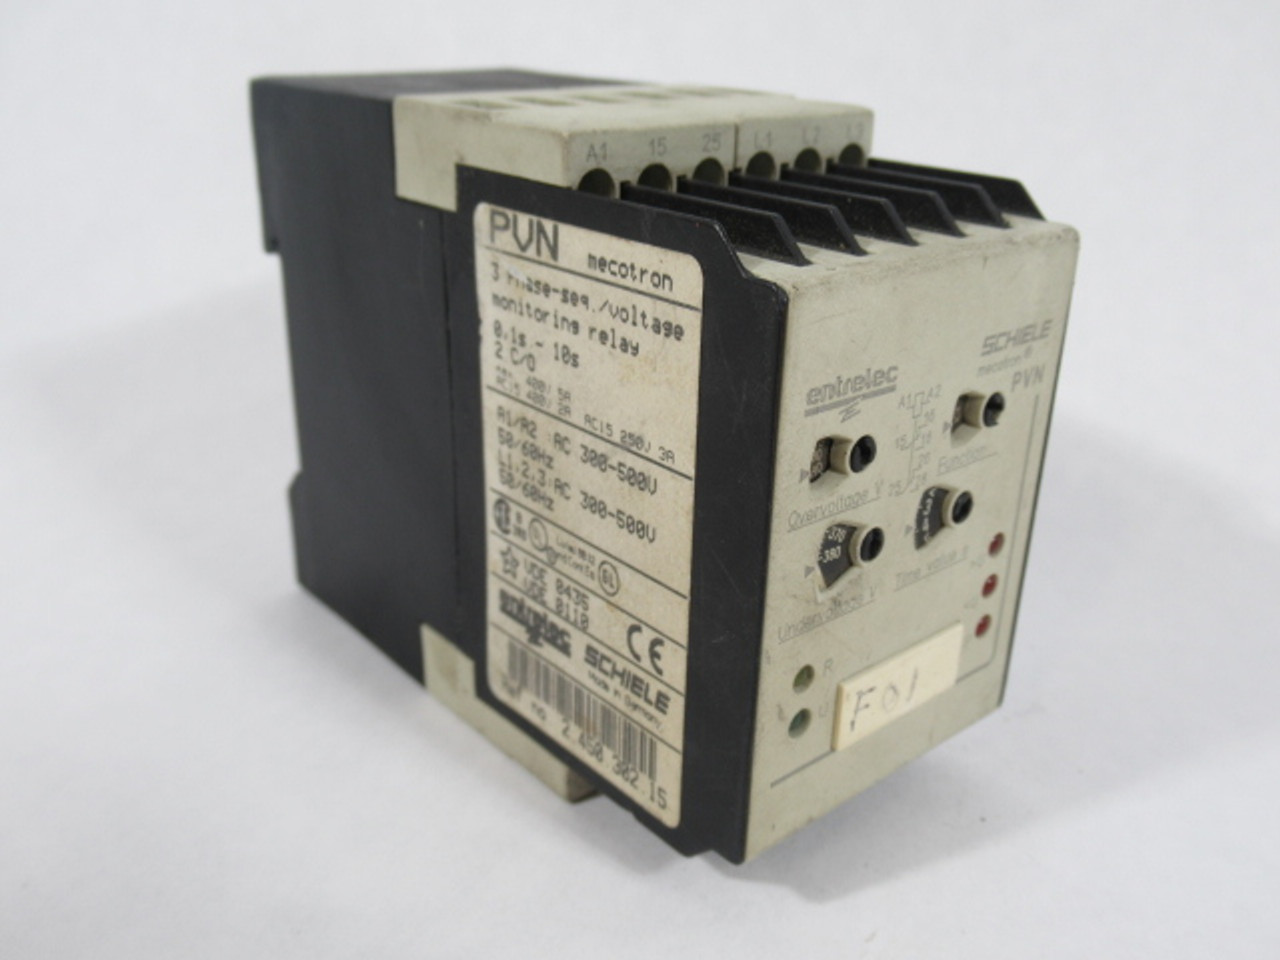 Entrelec 2.450.302.15 3 Phase-Seq/Voltage Monitoring Relay 300-500V USED